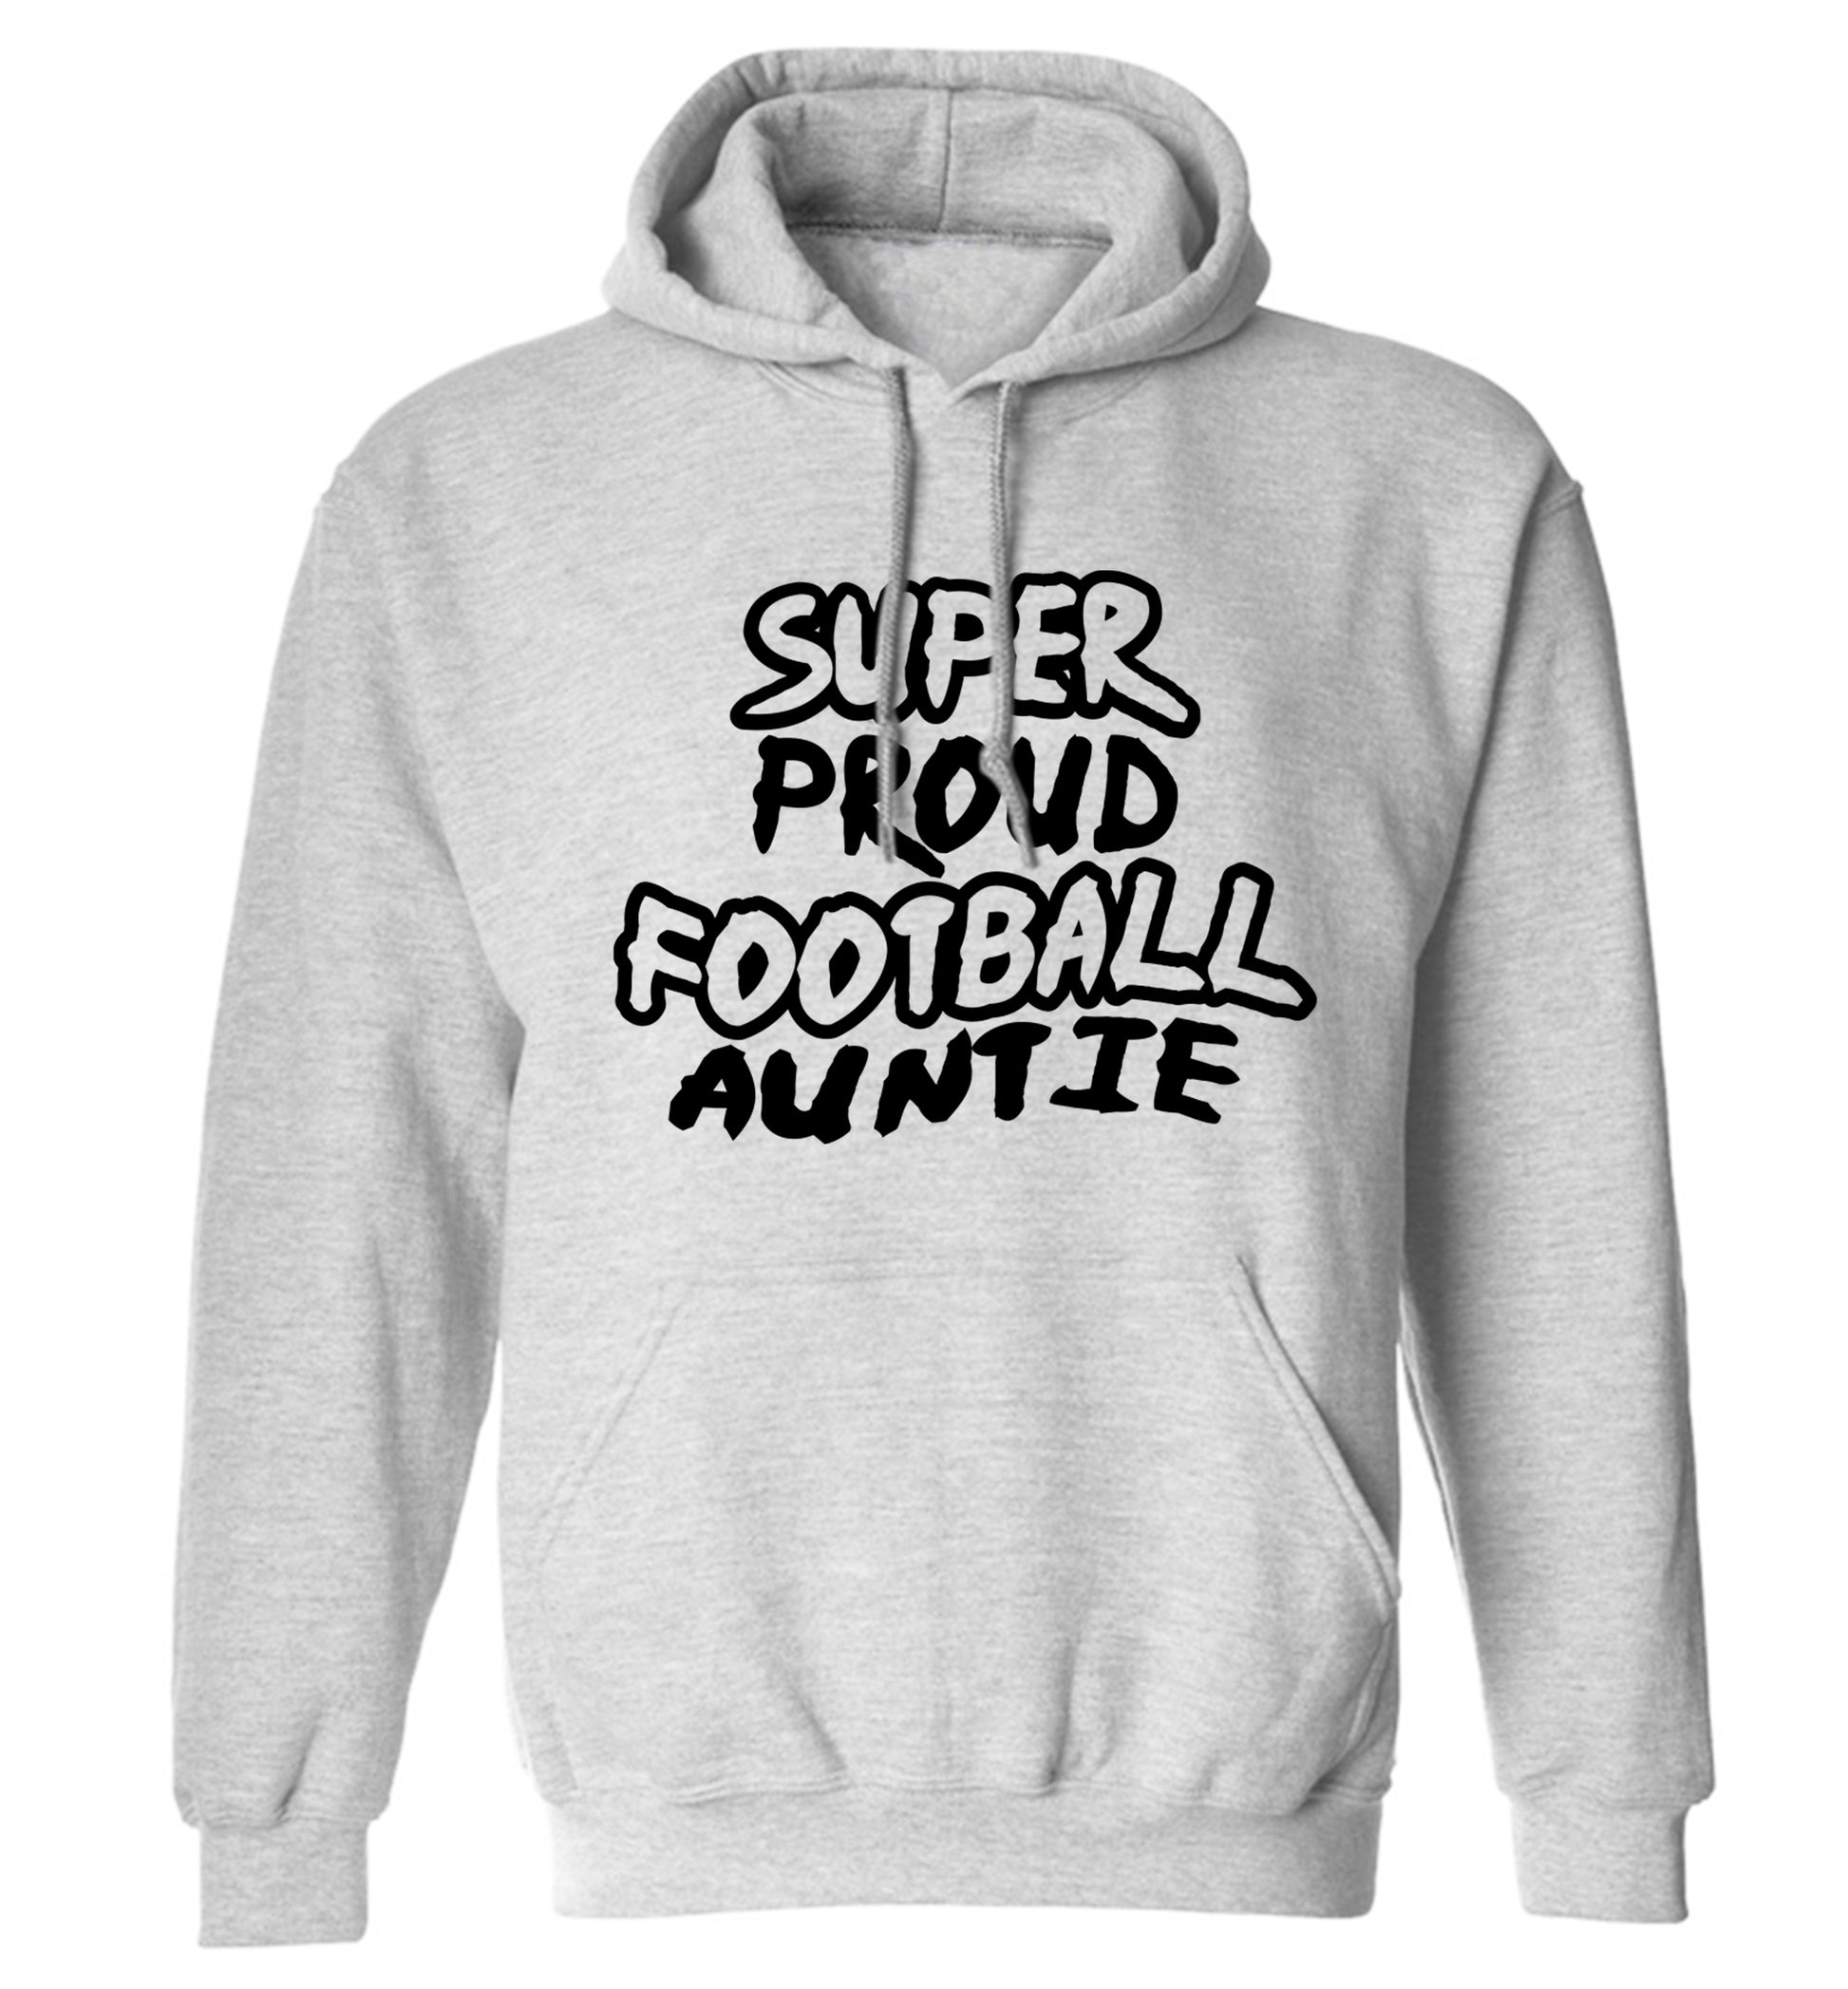 Super proud football auntie adults unisexgrey hoodie 2XL